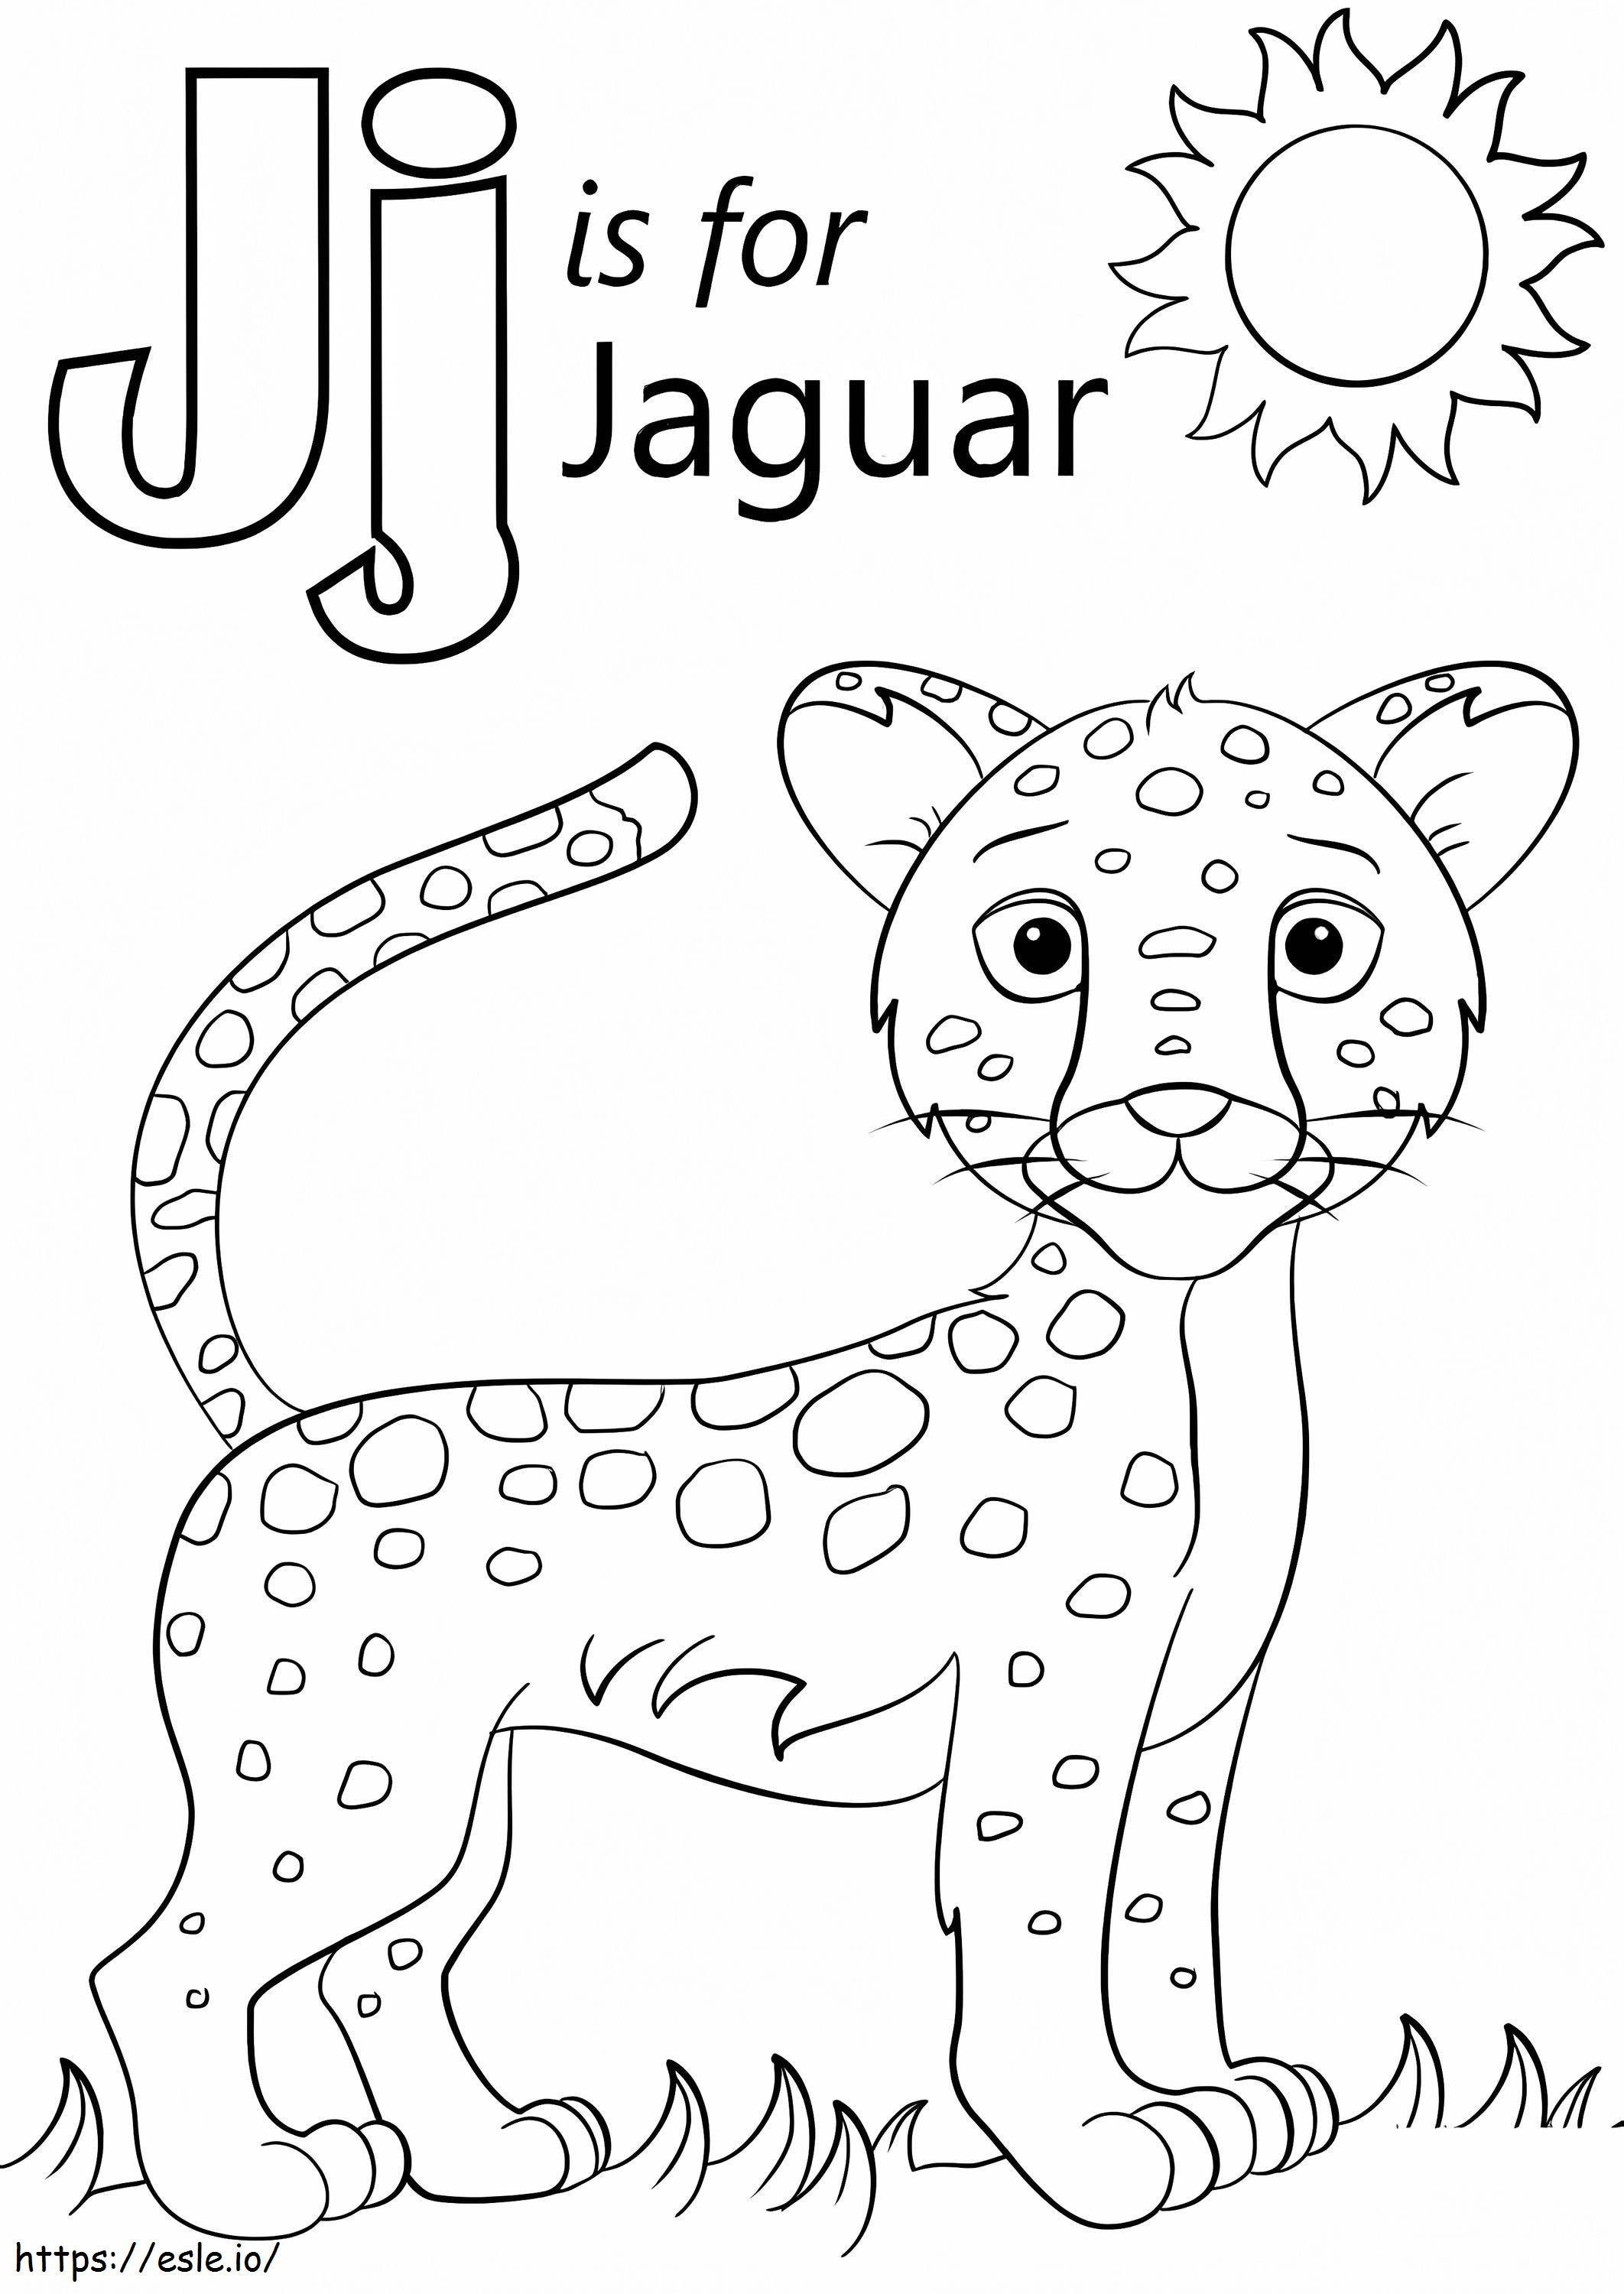 Letra J De Jaguar para colorear